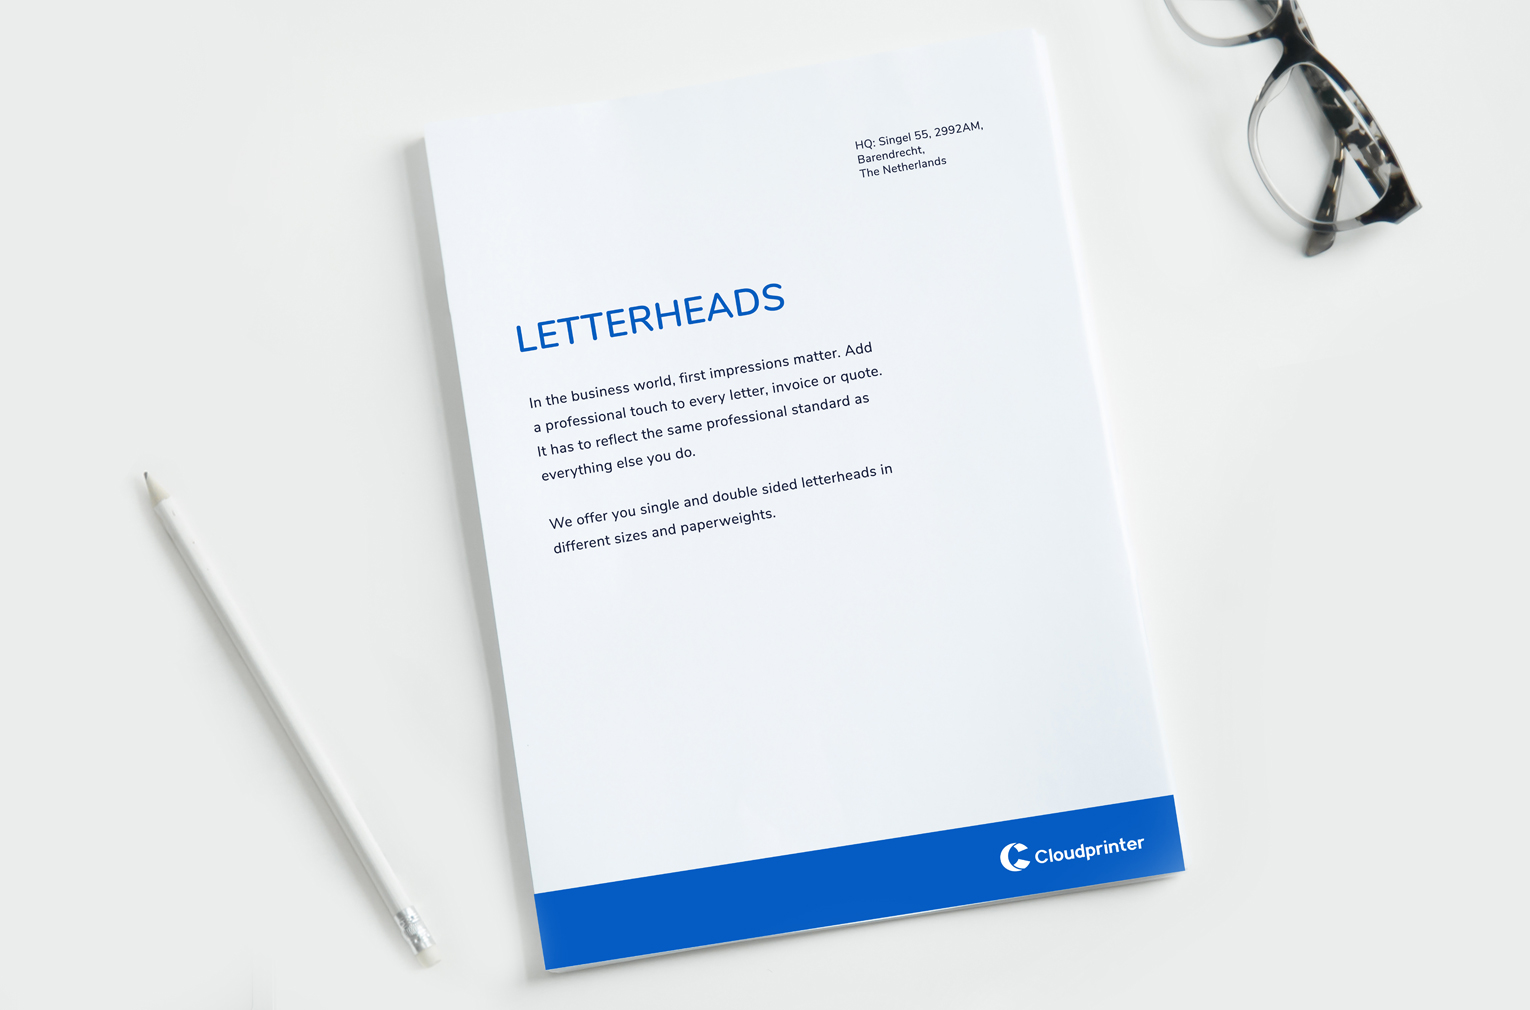 Print on demand Letterheads with Cloudprinter.com